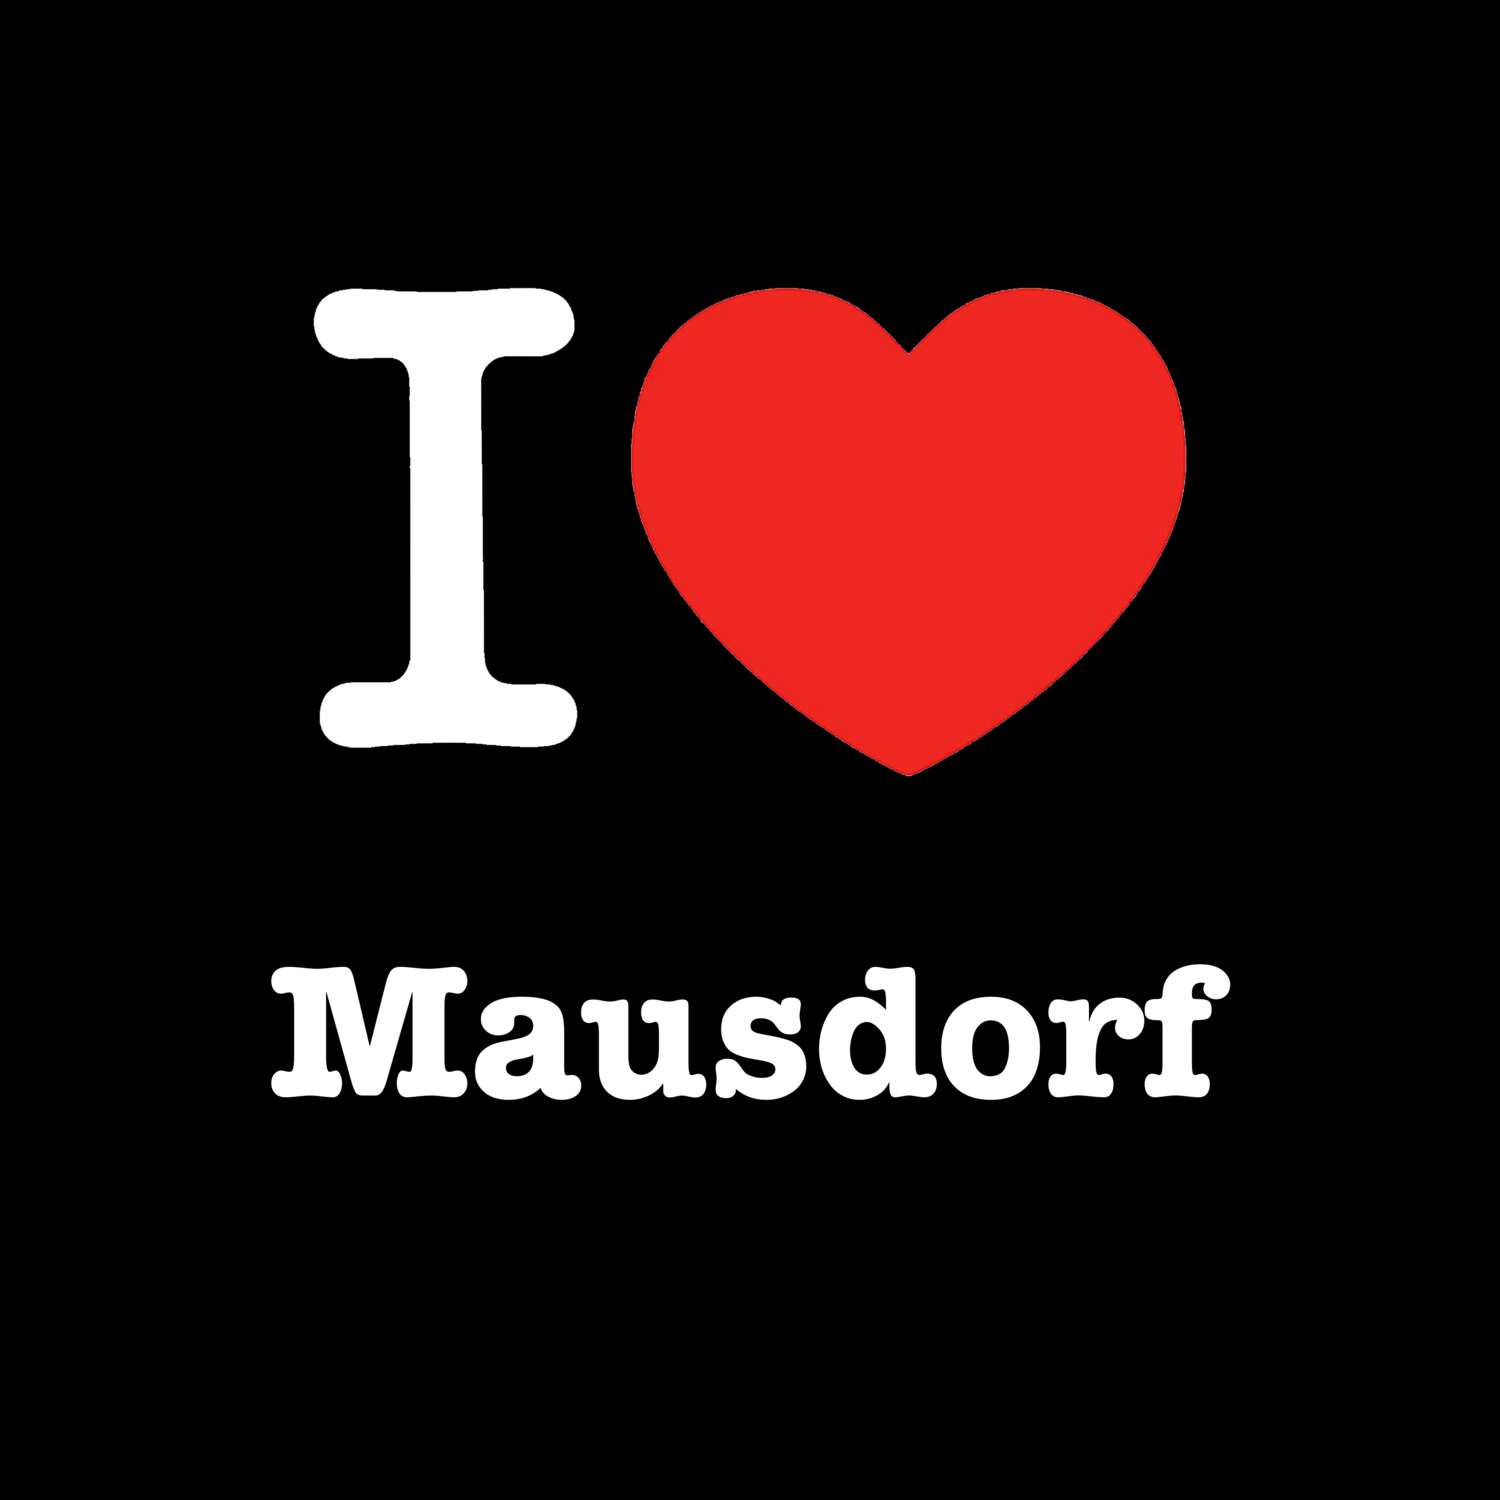 Mausdorf T-Shirt »I love«